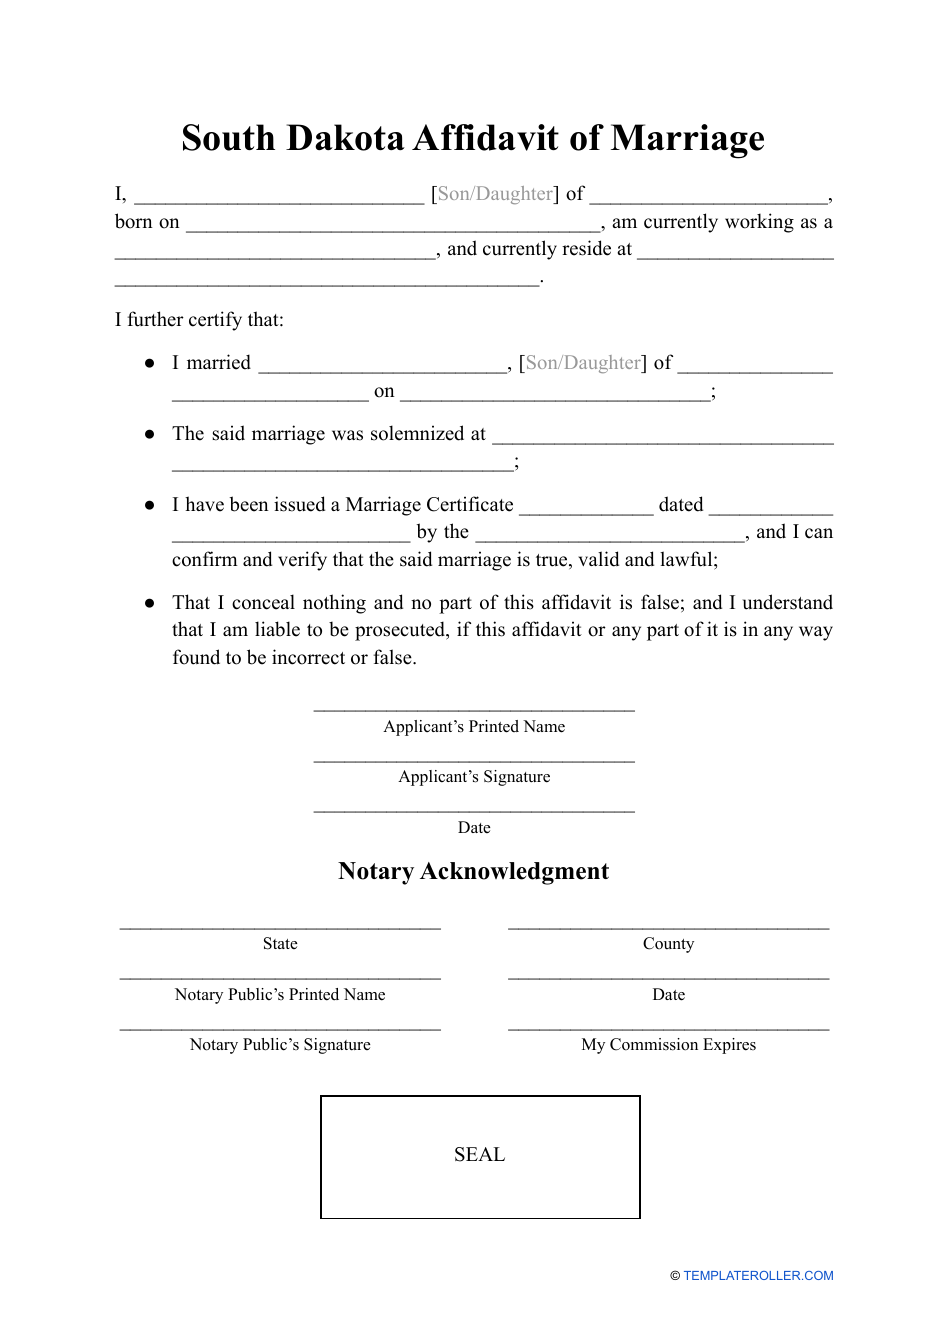 Affidavit of Marriage - South Dakota, Page 1